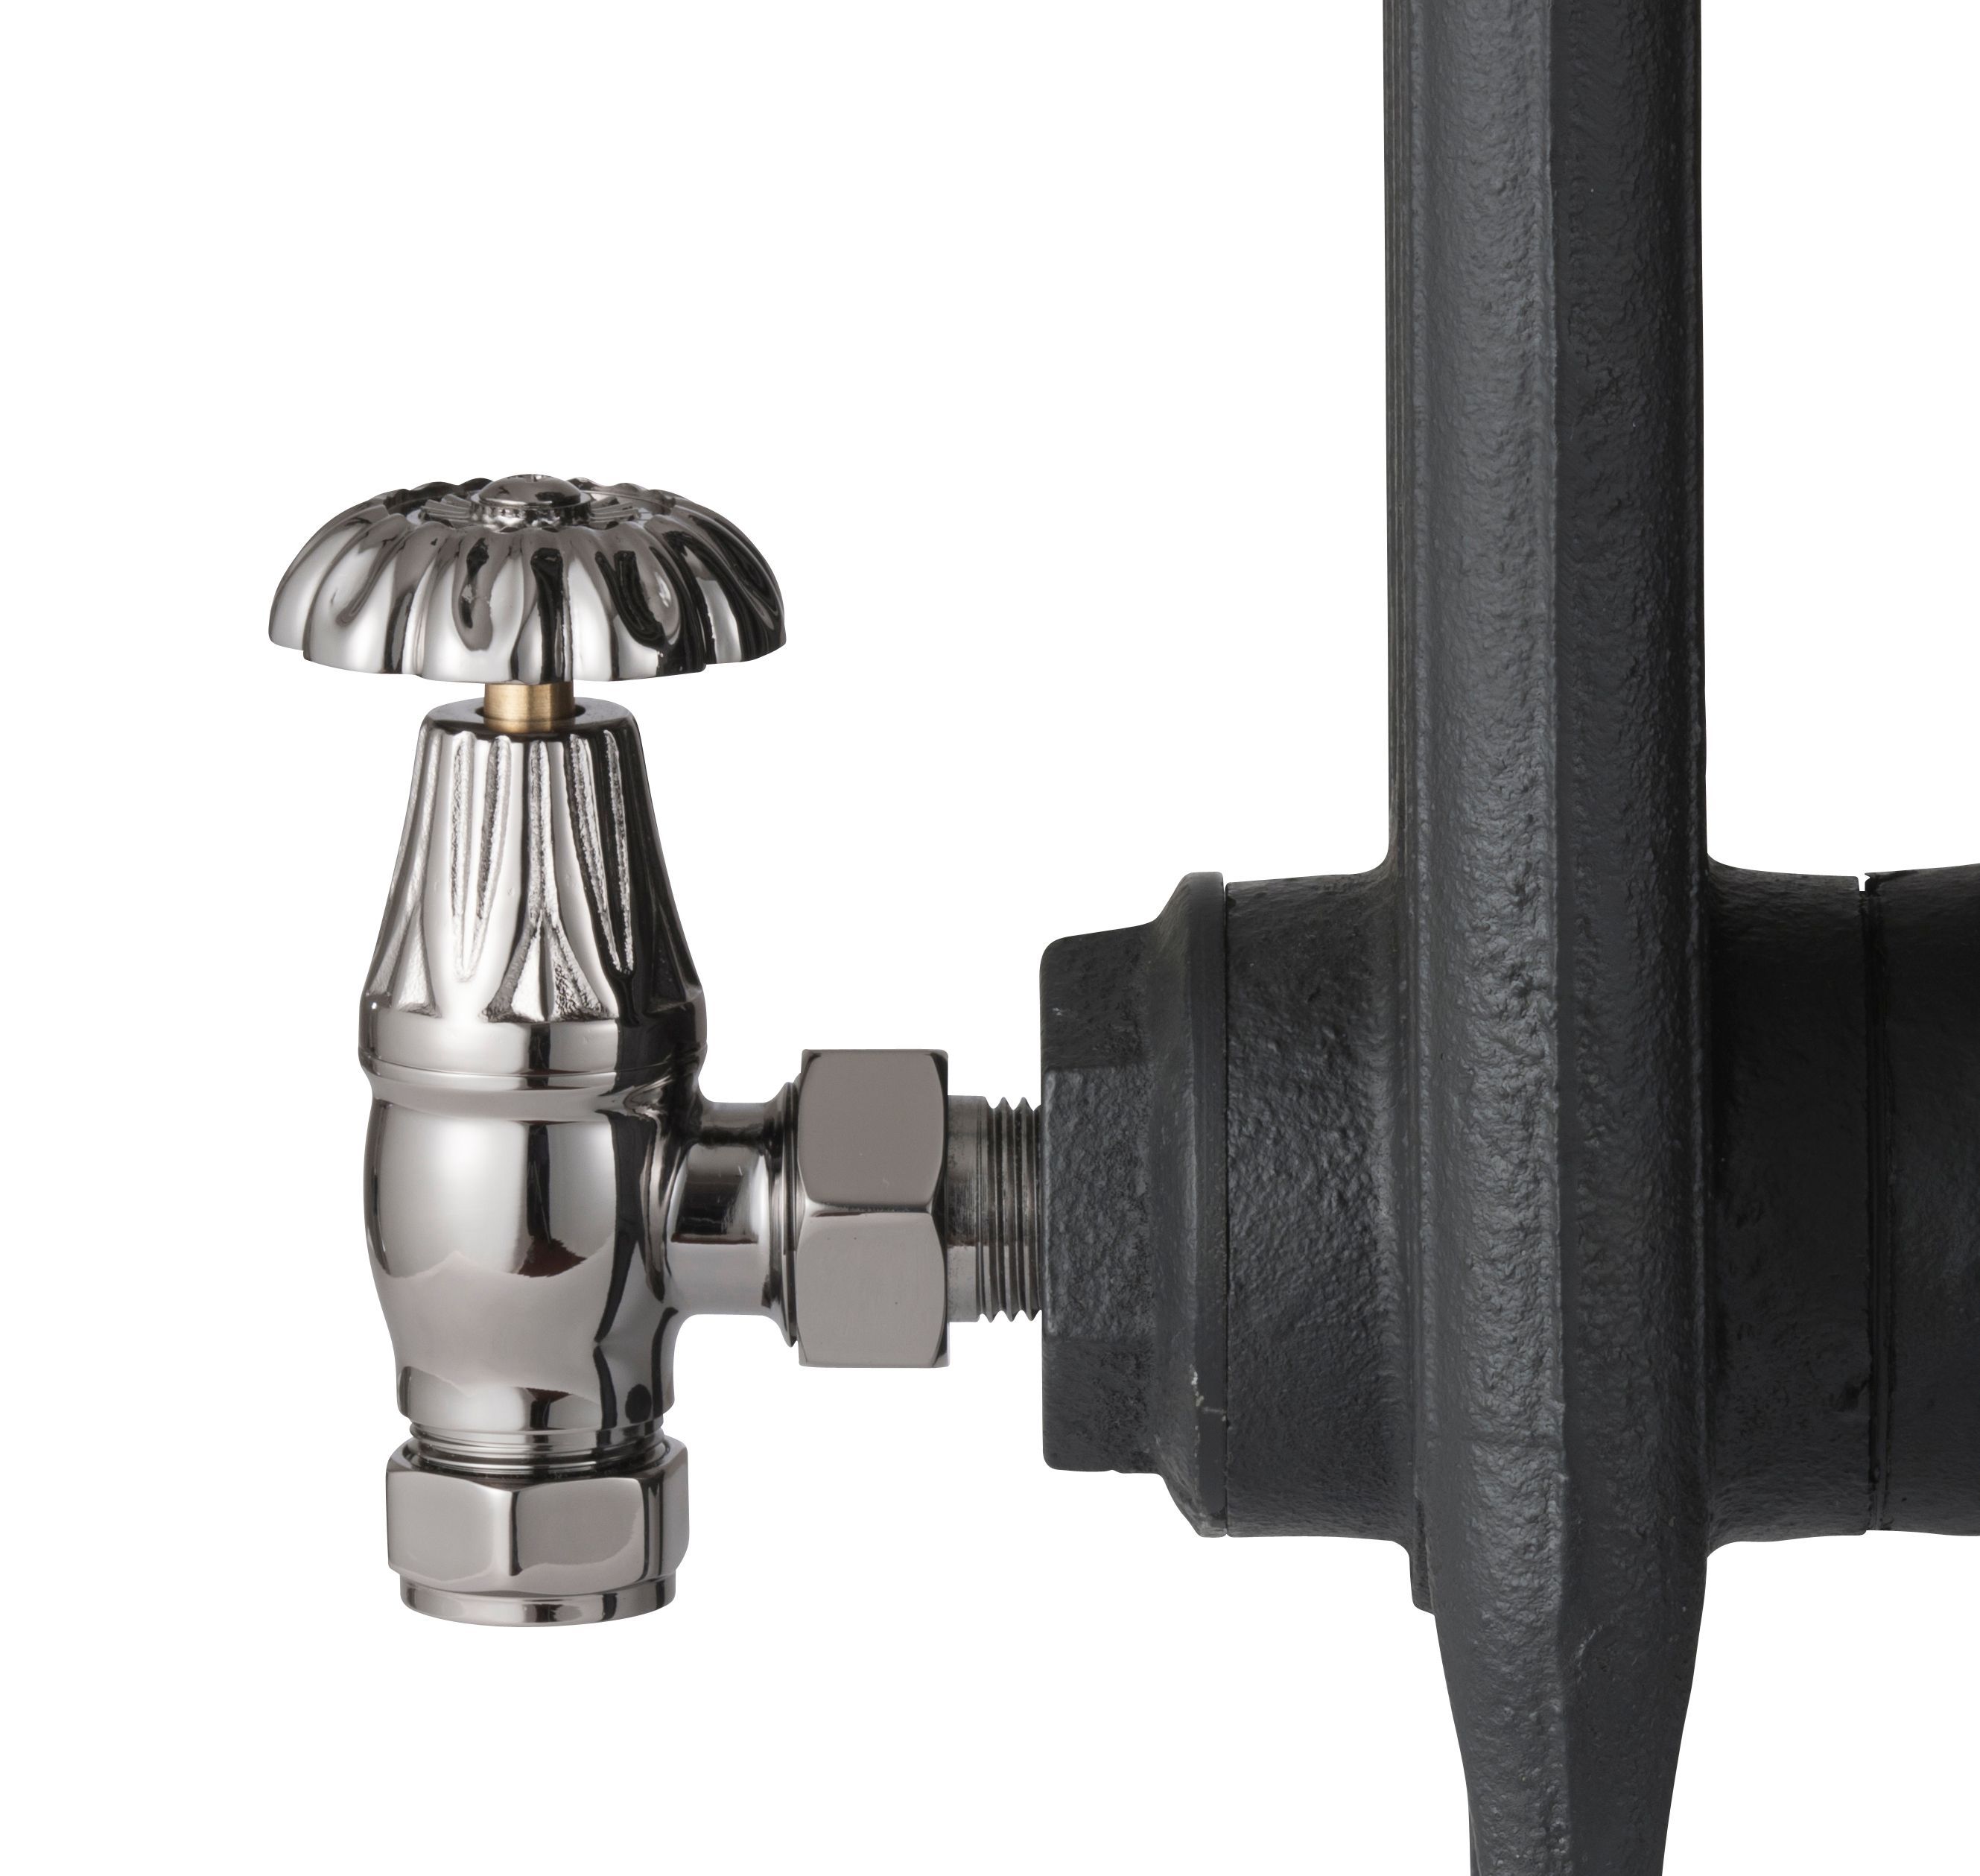 Arroll UK10 Black nickel effect Angled Manual Radiator valve (Dia)20.6mm